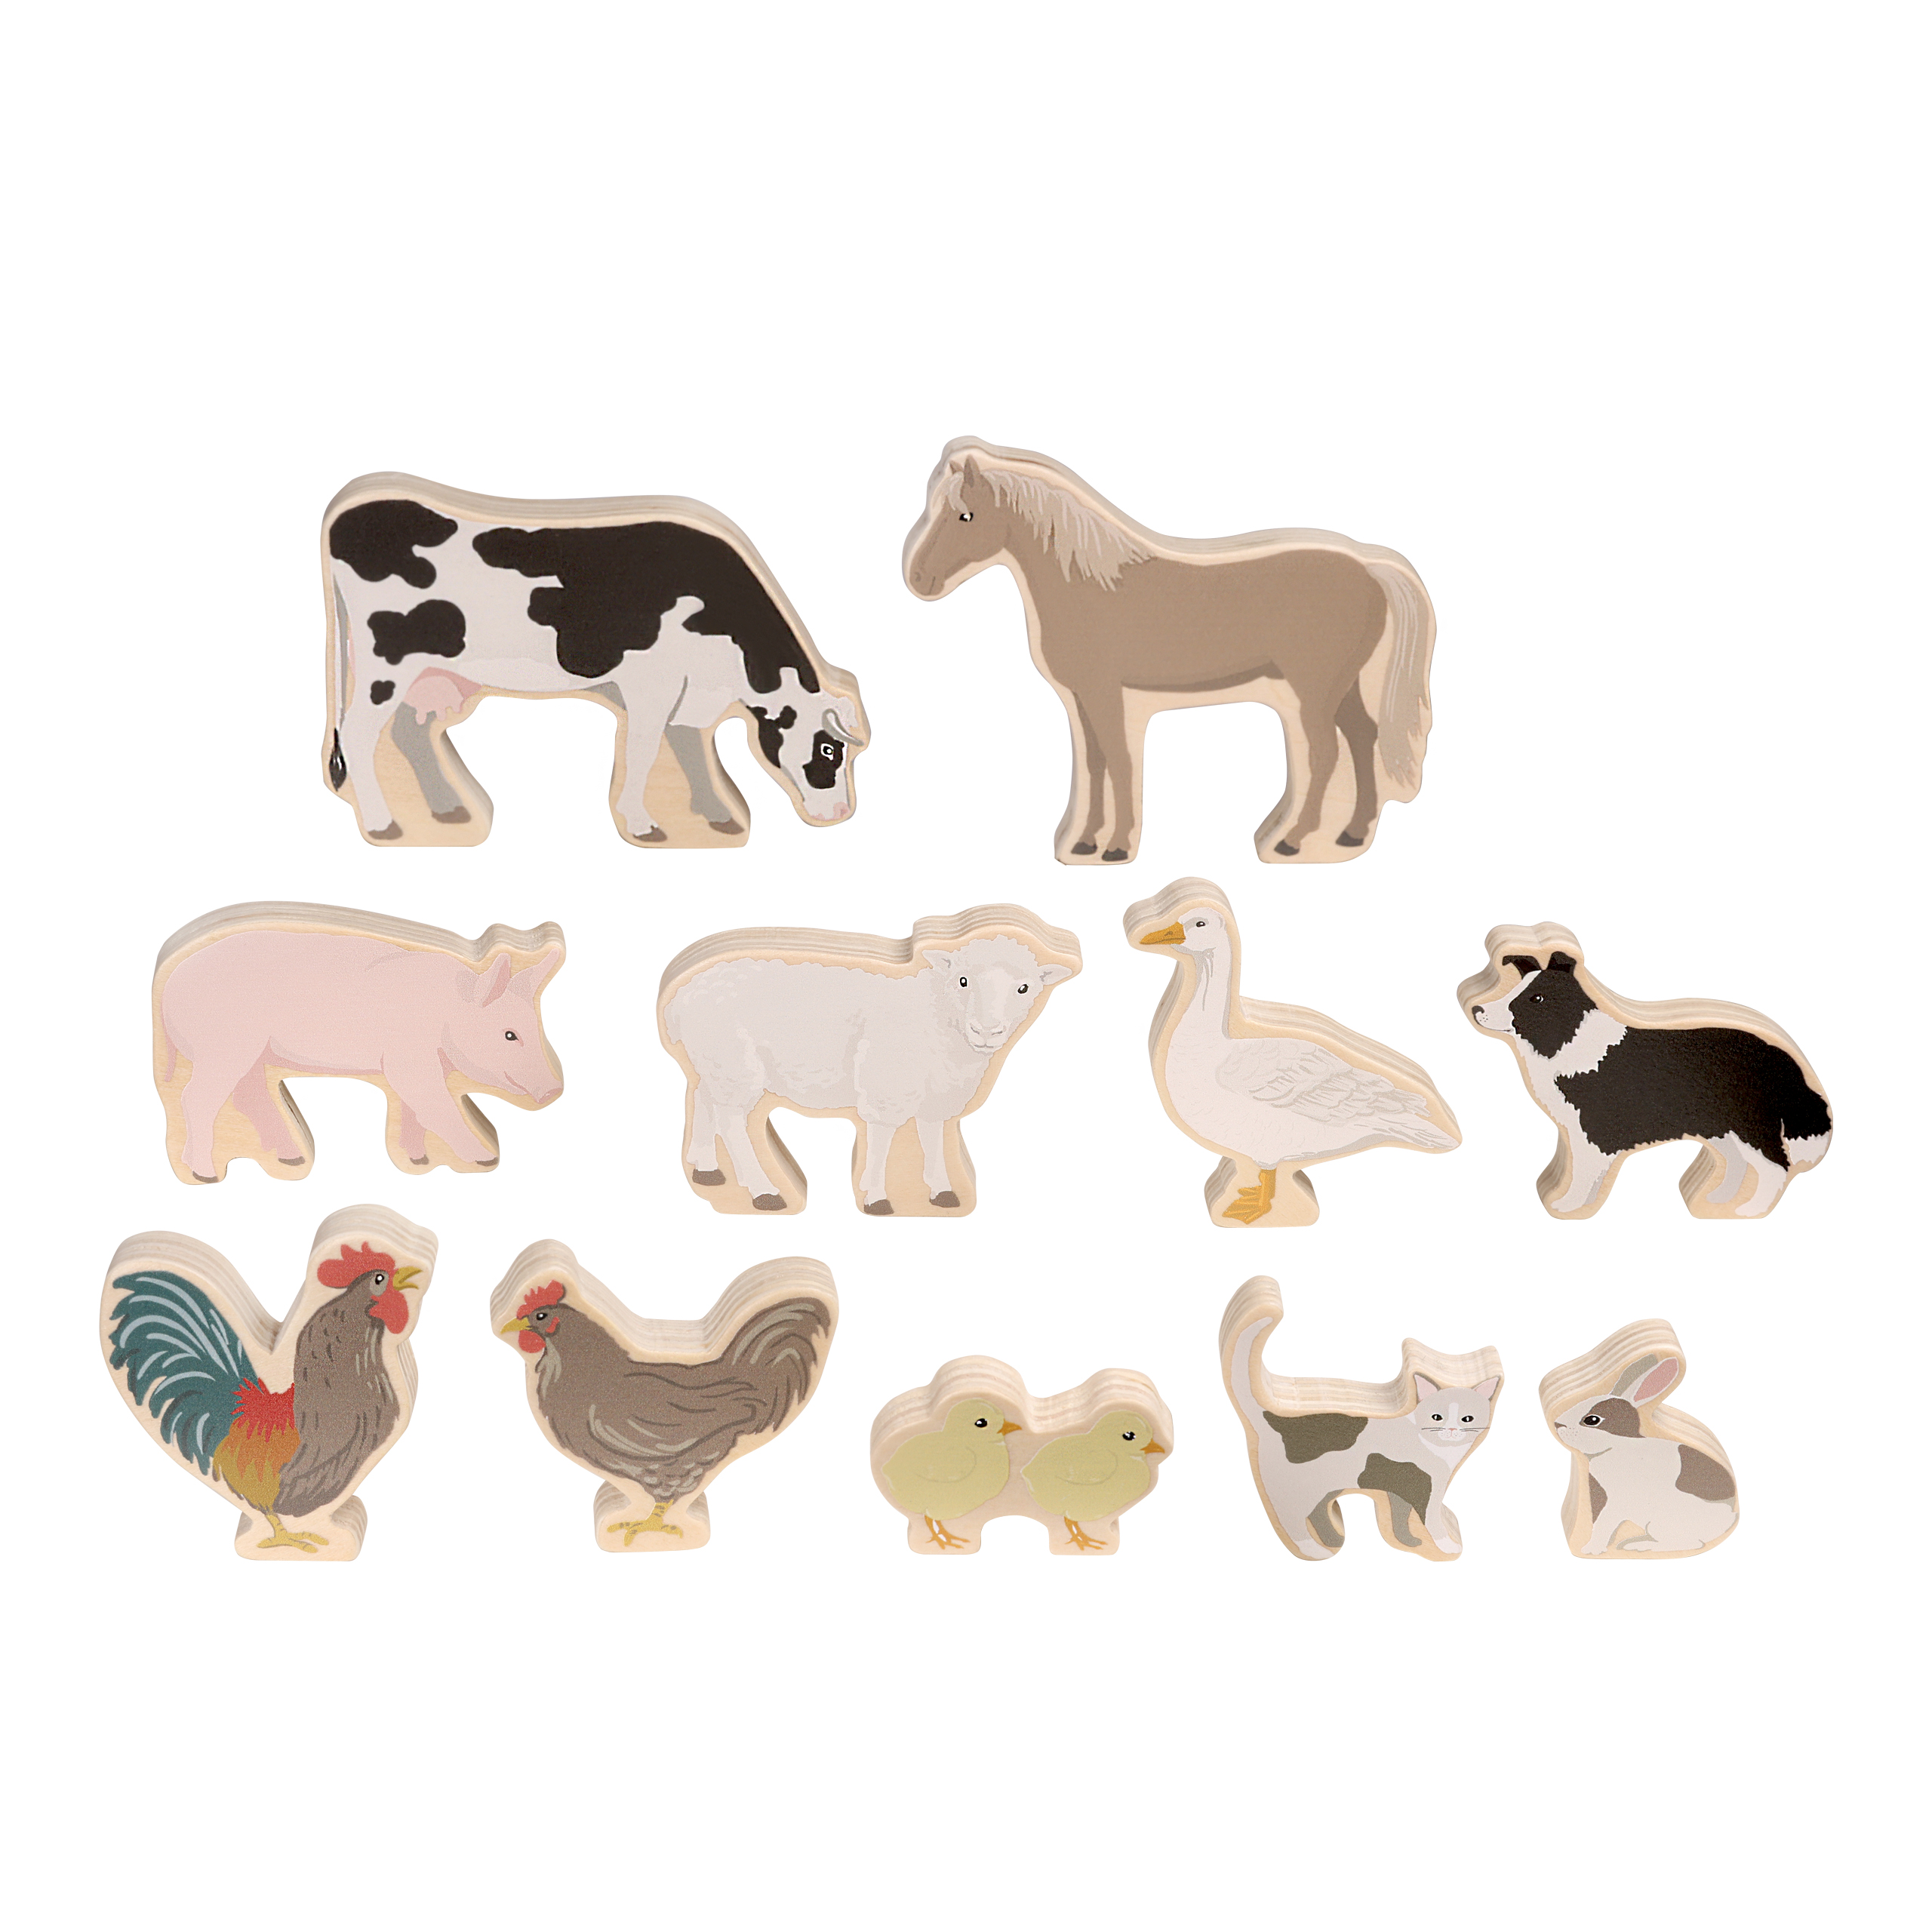 Figurines micki figurine set wooden farm animals